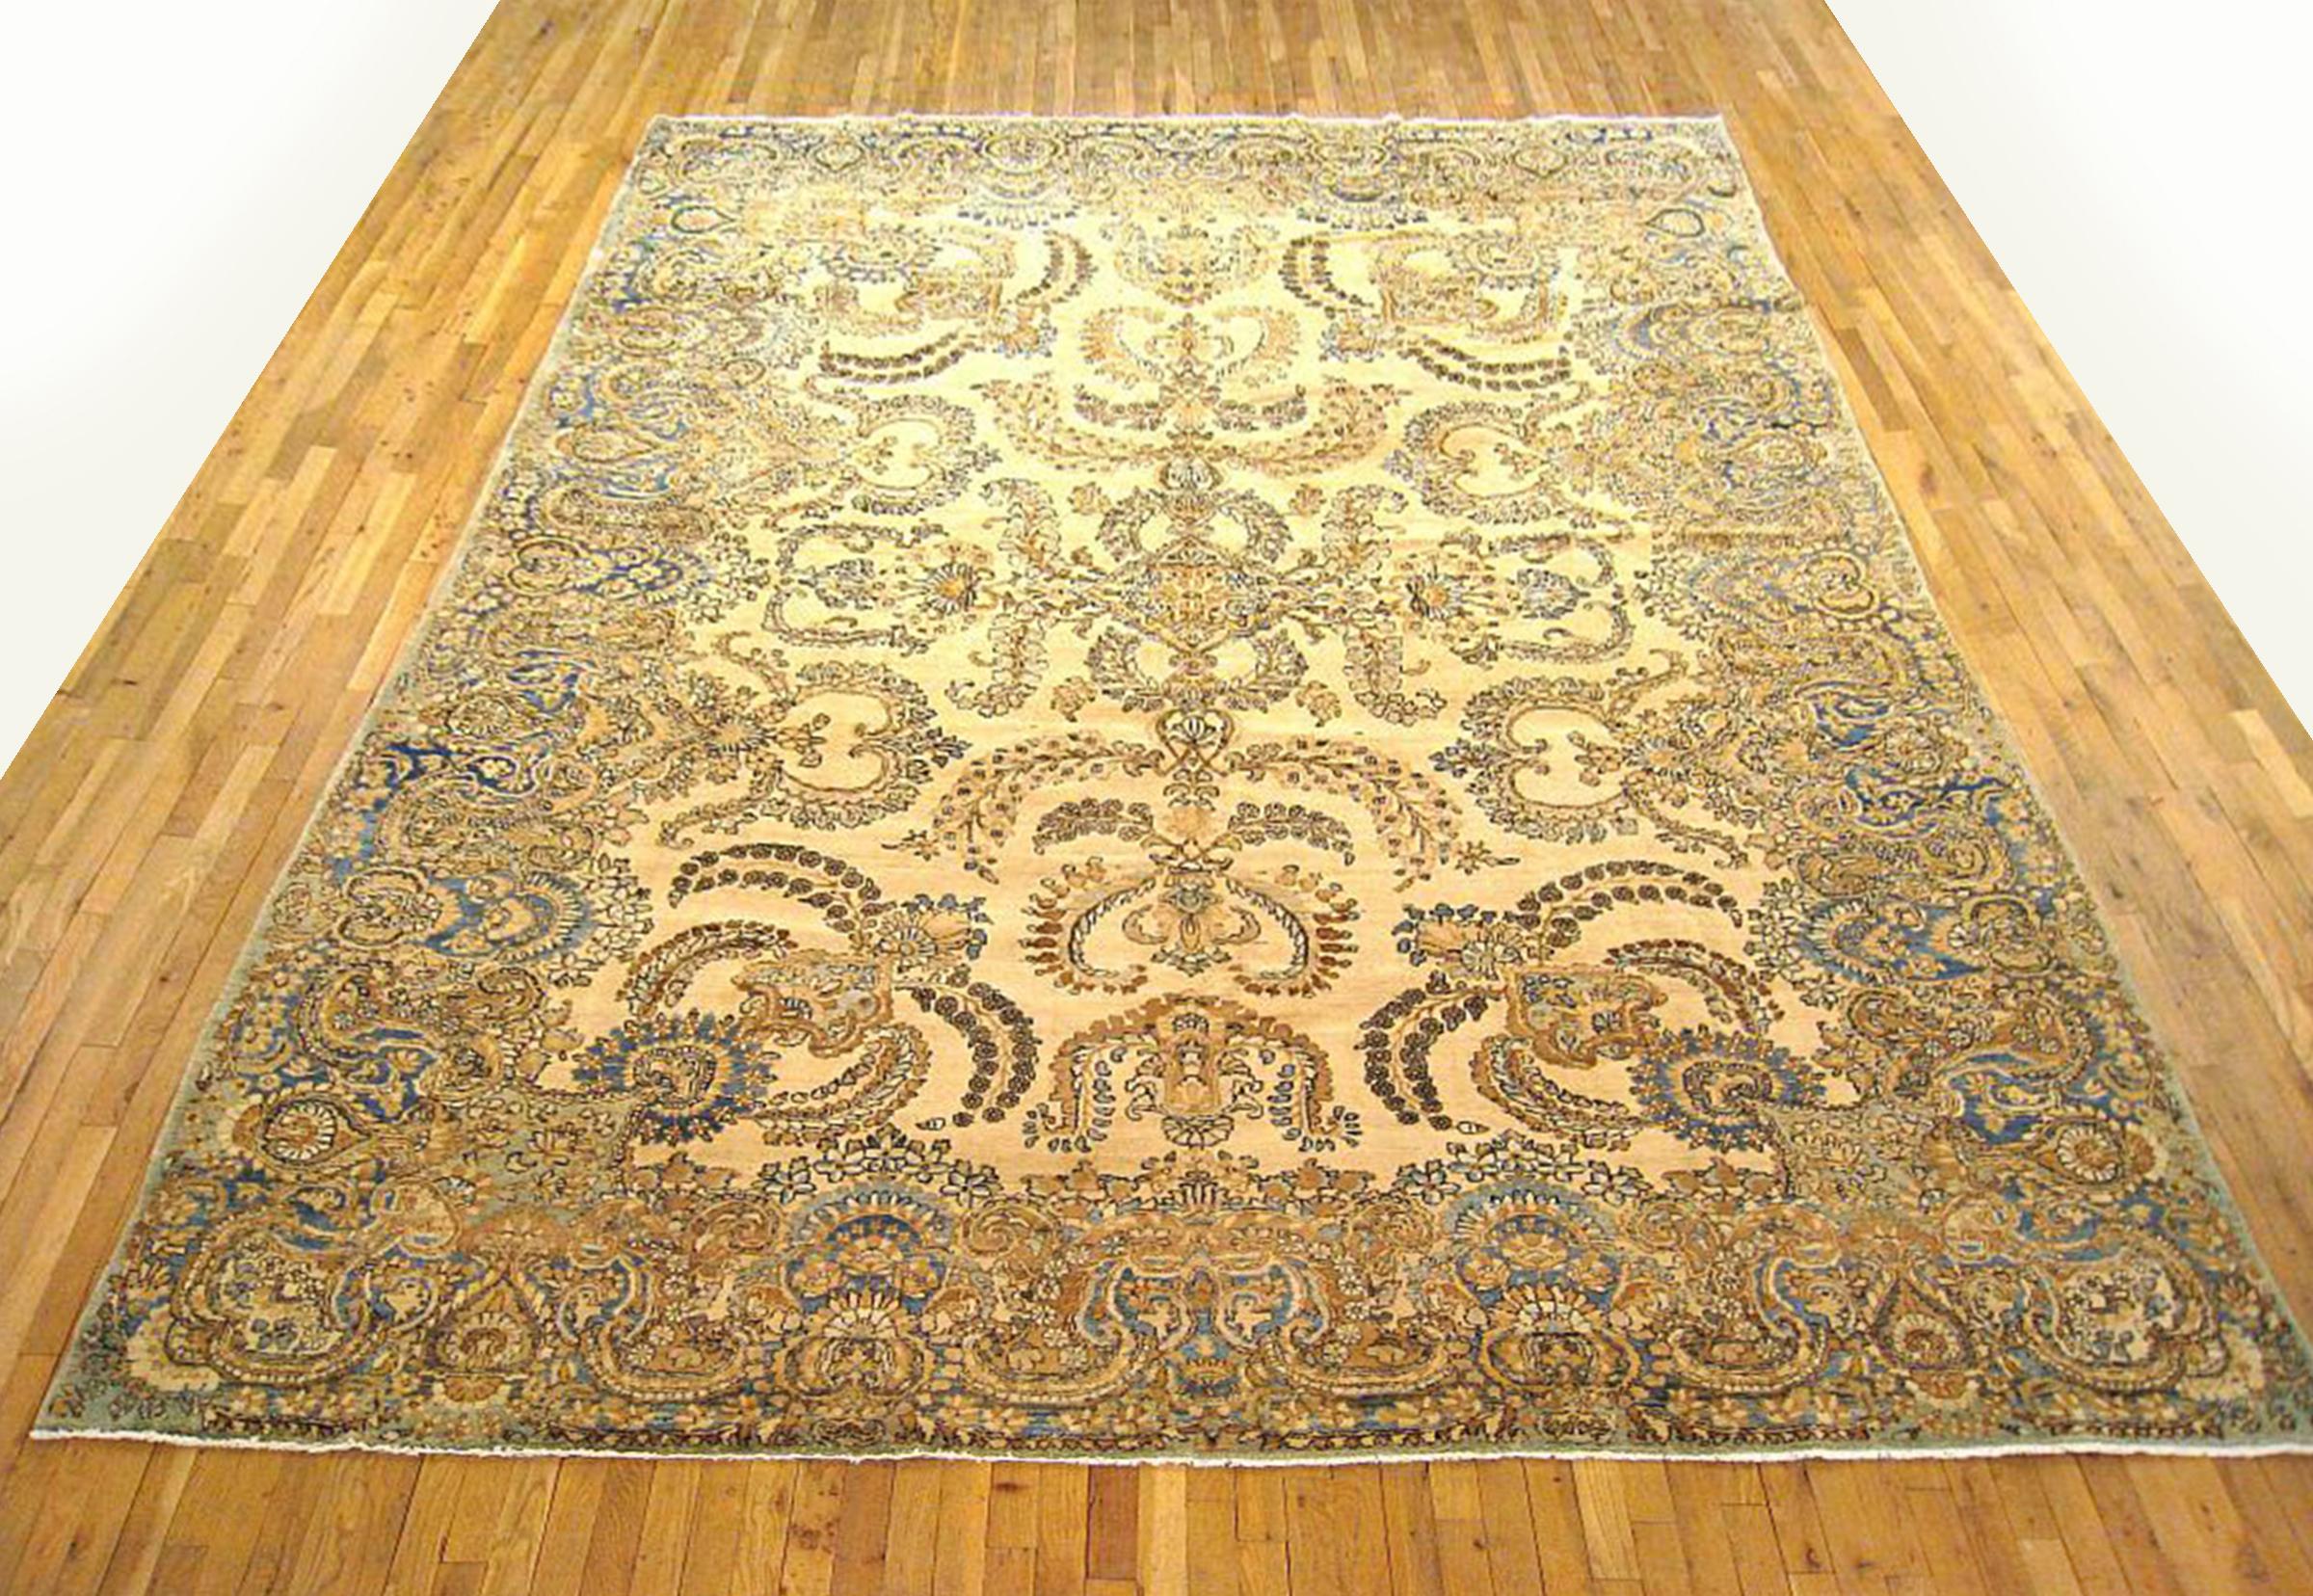 Antique Persian Kerman oriental carpet, size 13'6